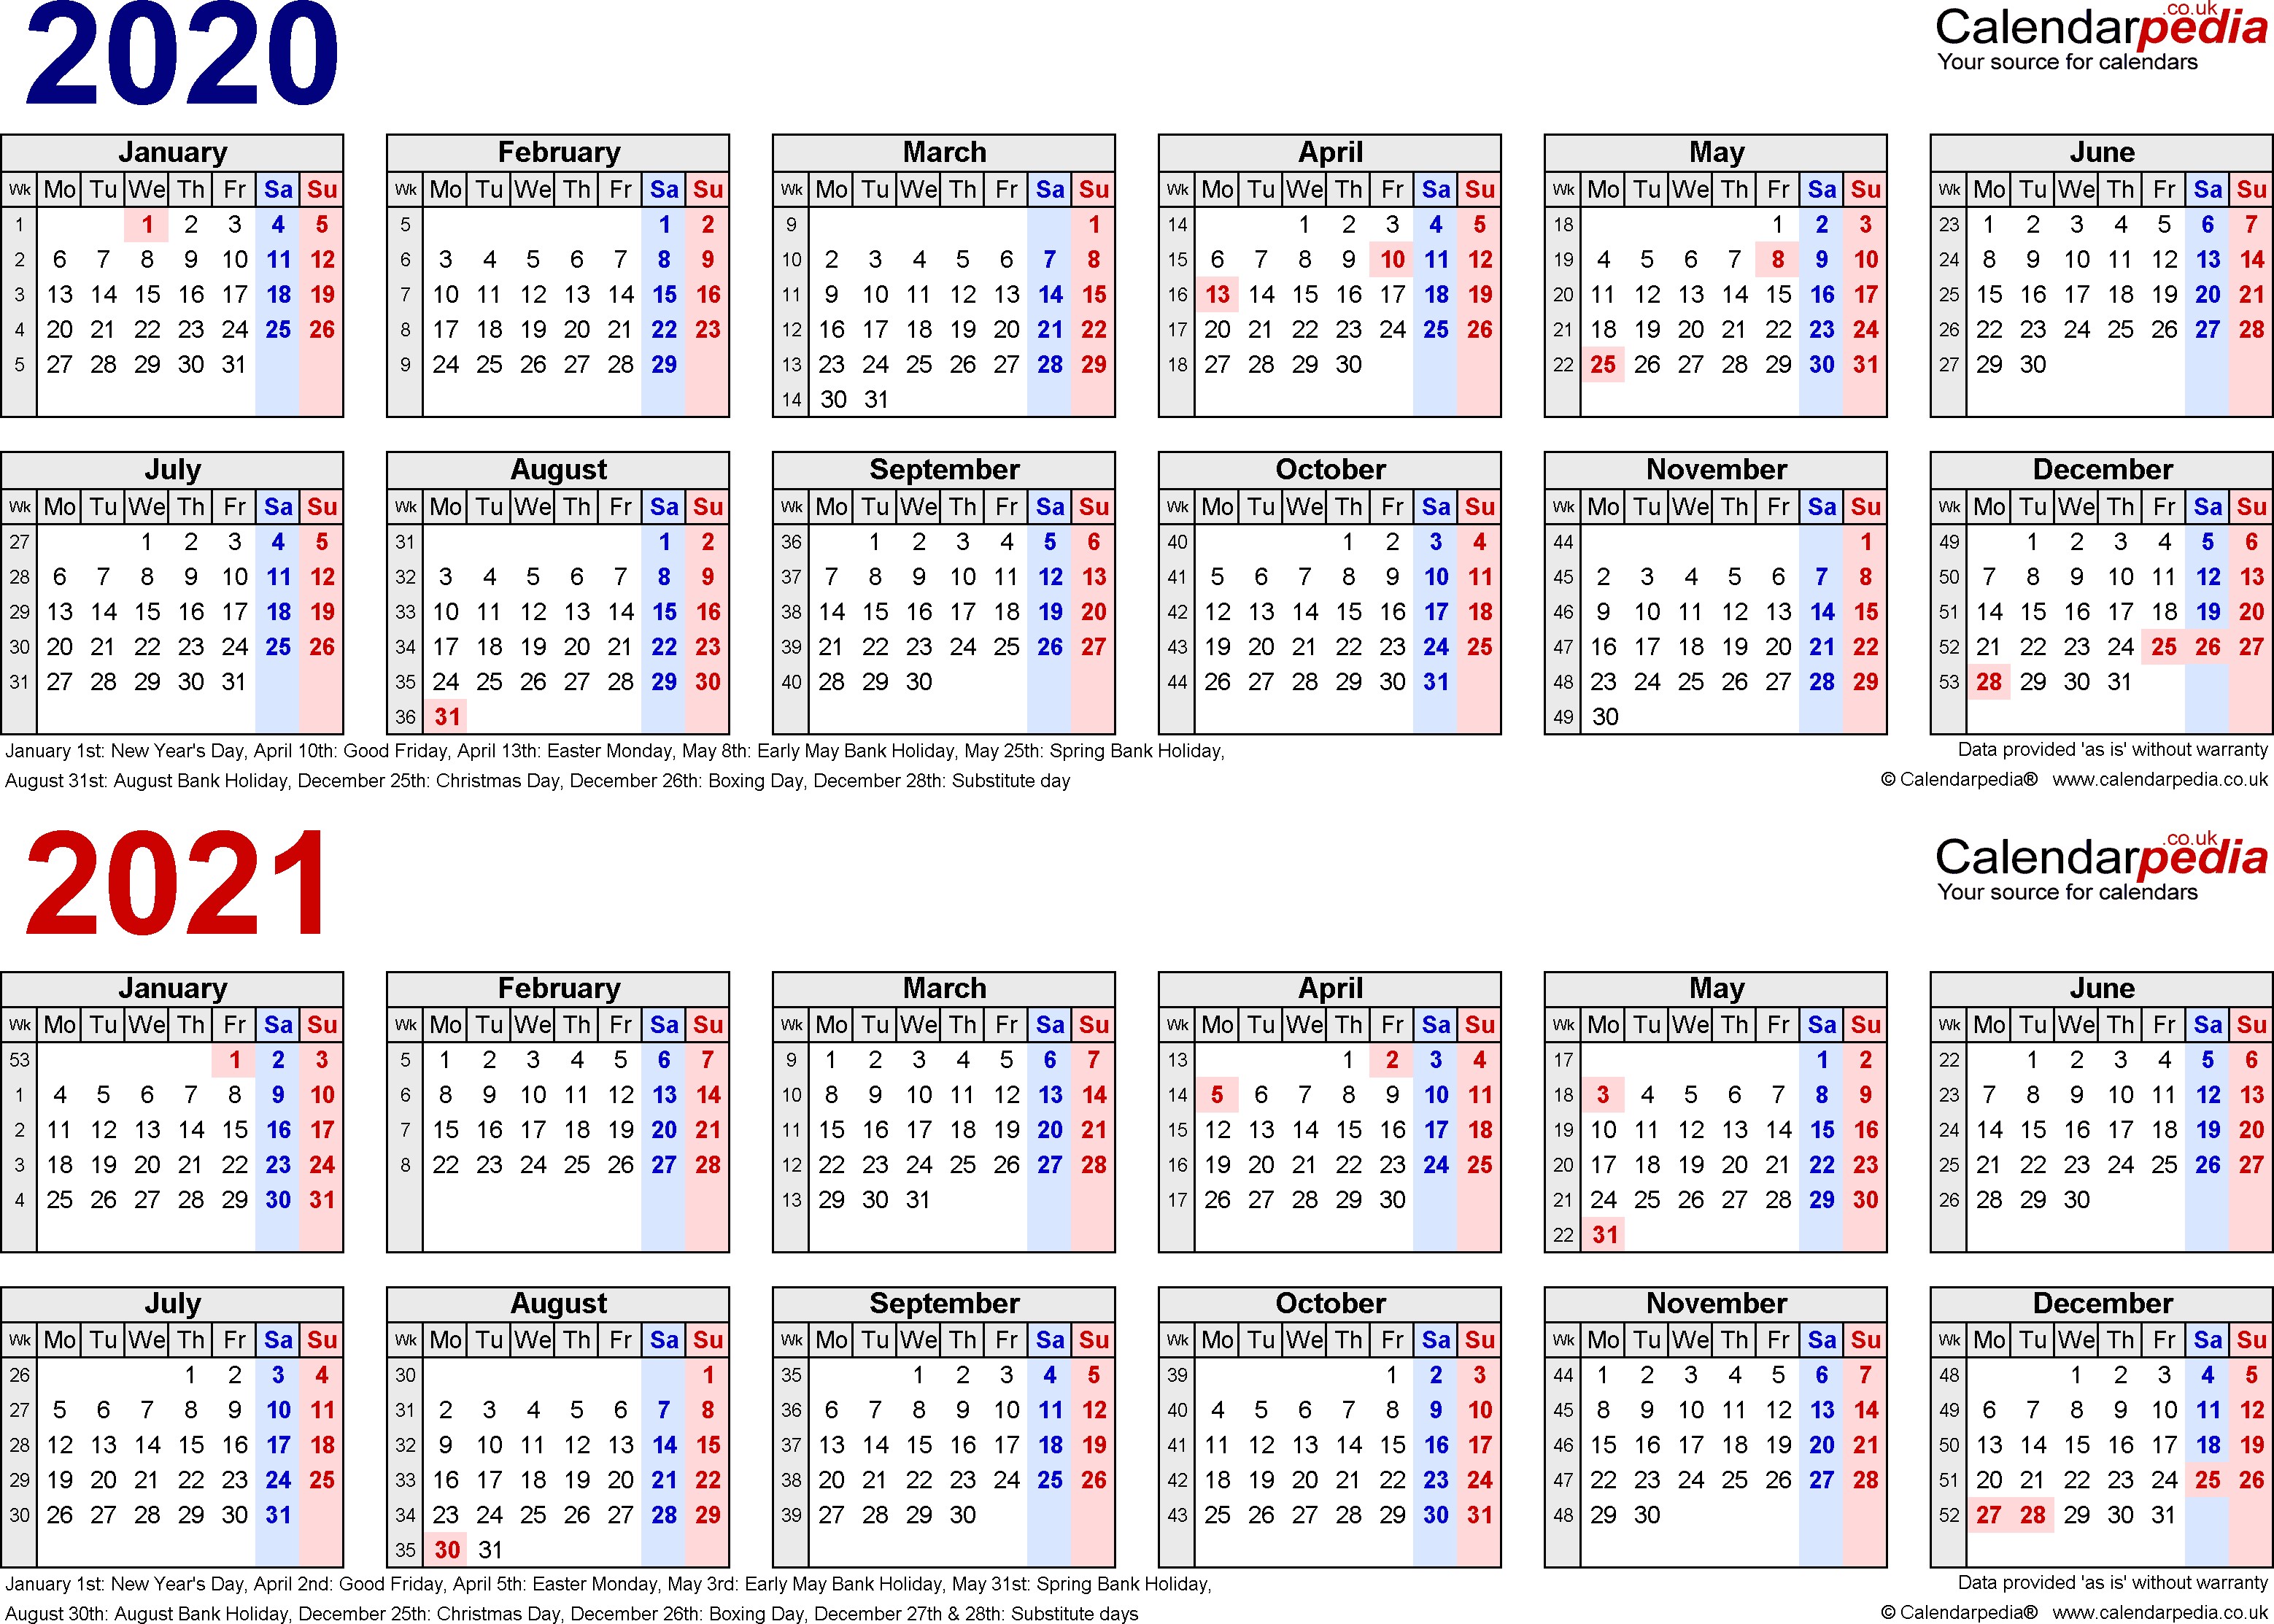 2020-21 Calendar Printable | Get Free Printable Calendar ...